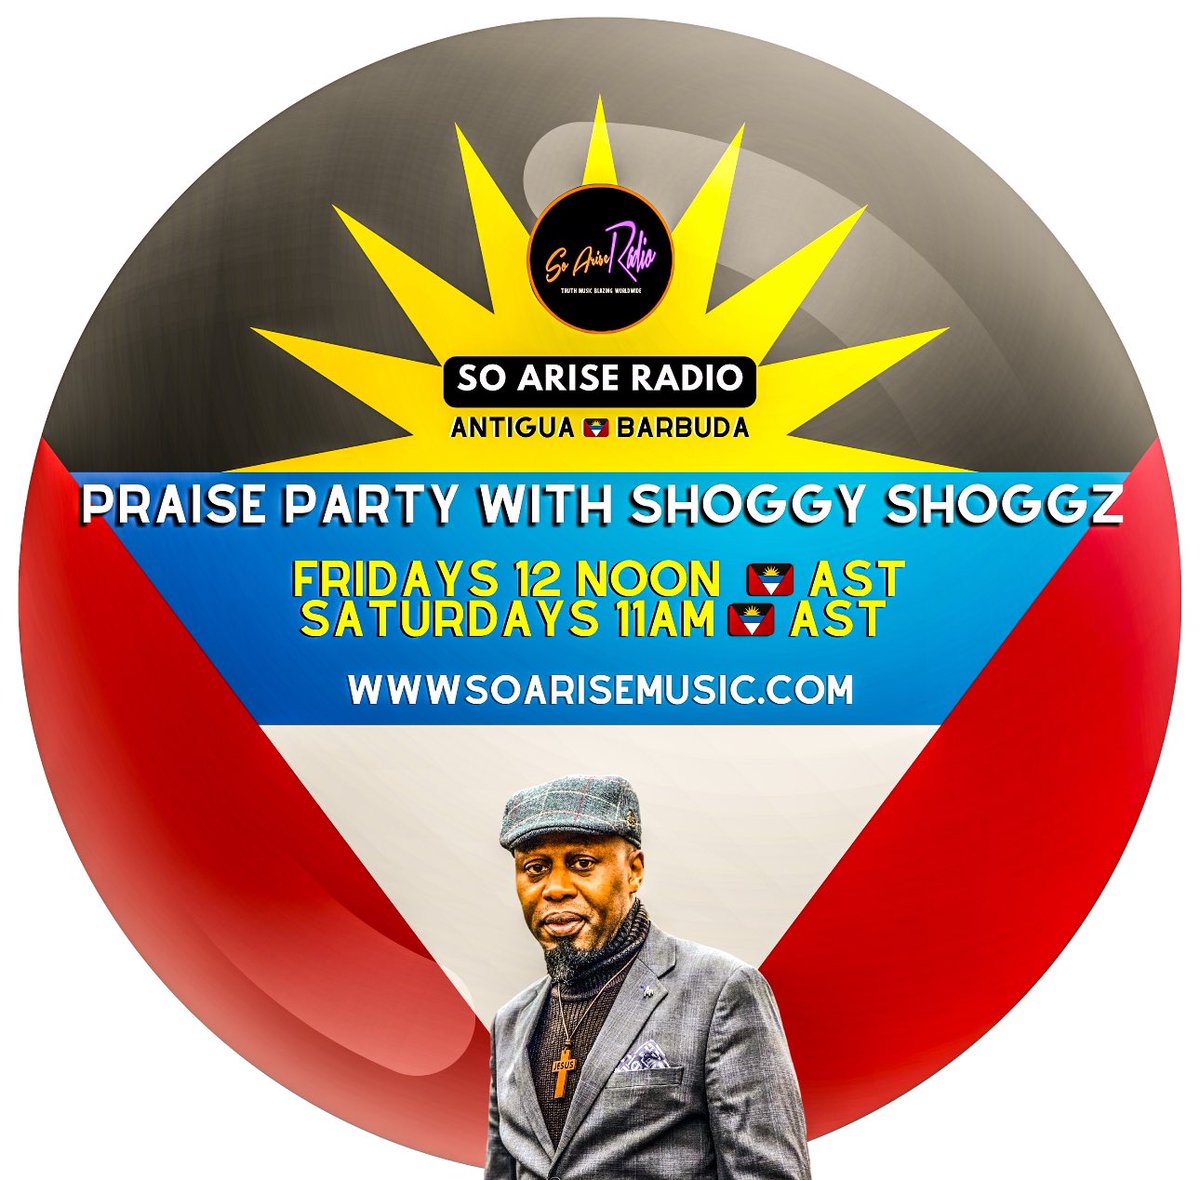 📌 ANTIGUA 🇦🇬 BARBUDA ♾️ @PraiseParty_SS with @ShoggyShoggz 🗓️ Fri 12NOON 🇦🇬 🧮 Sat 11AM 🇦🇬 🎼 PLAYED: 🇬🇭 GHANA: No juju @PreachersGH 🇳🇬 NIGERIA: Nara @timgodfreyworld / @TravisGreeneTV 🇦🇴 ANGOLA: Le King M'a Validé @BigtyOfficiel / @Markisprod ☀️ soarisemusic.com